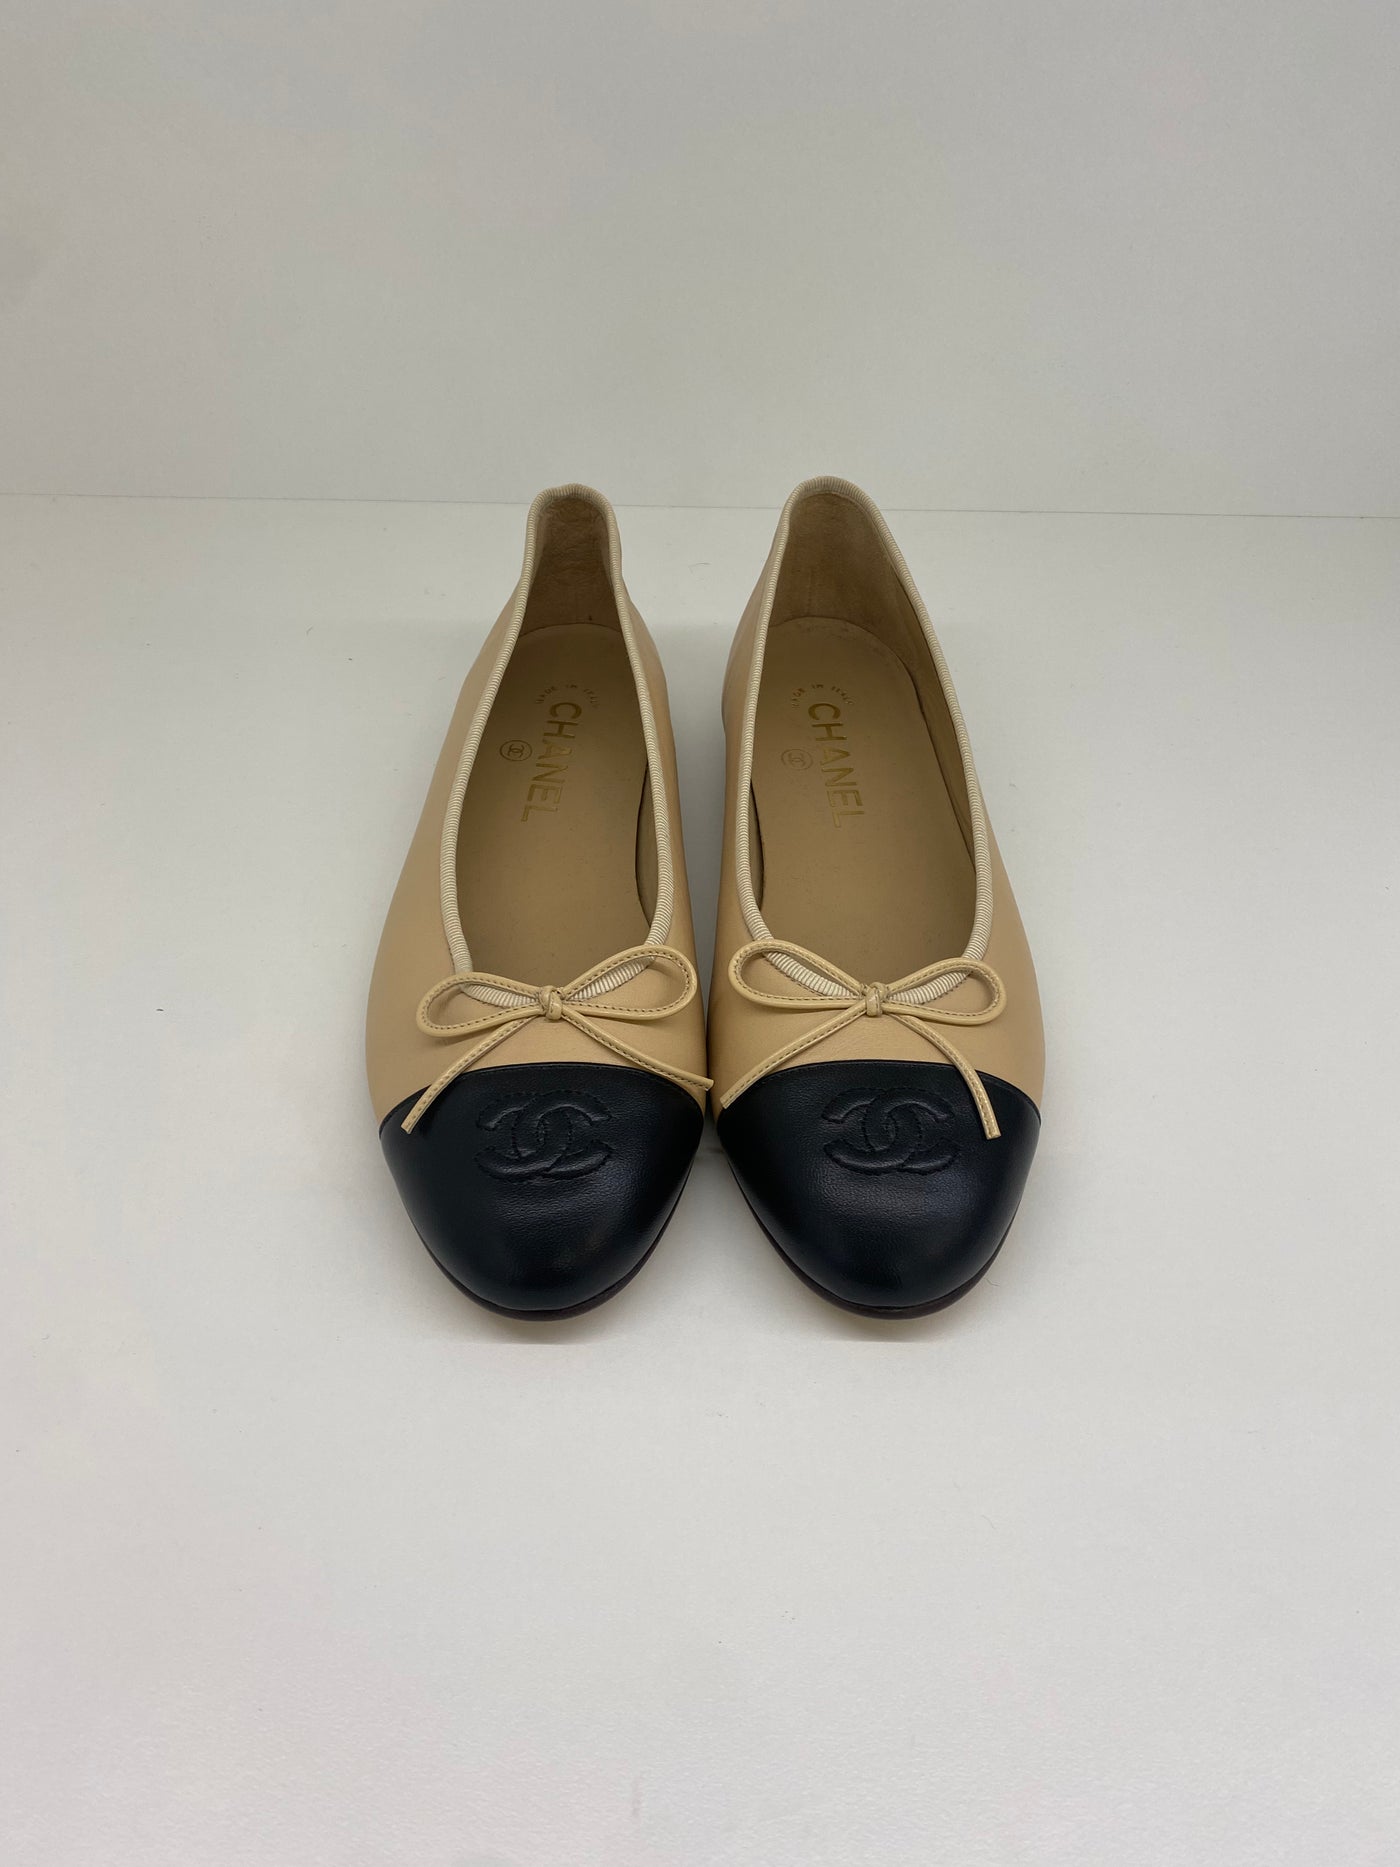 Chanel Ballet Flats size 38